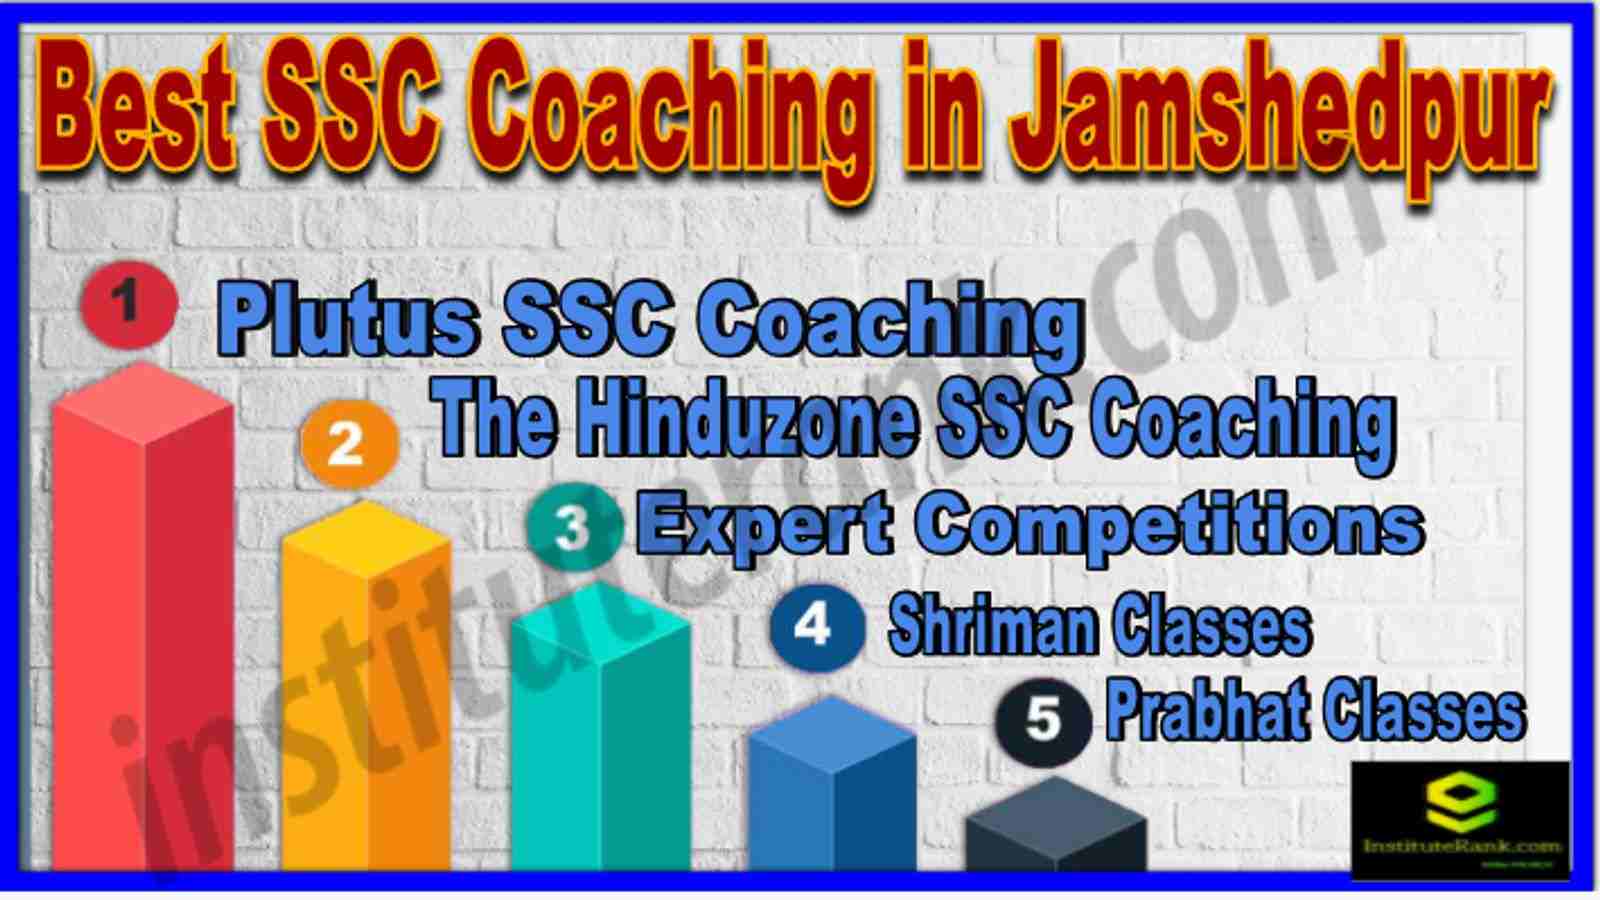 Best SSC Coaching in Jamshedpur